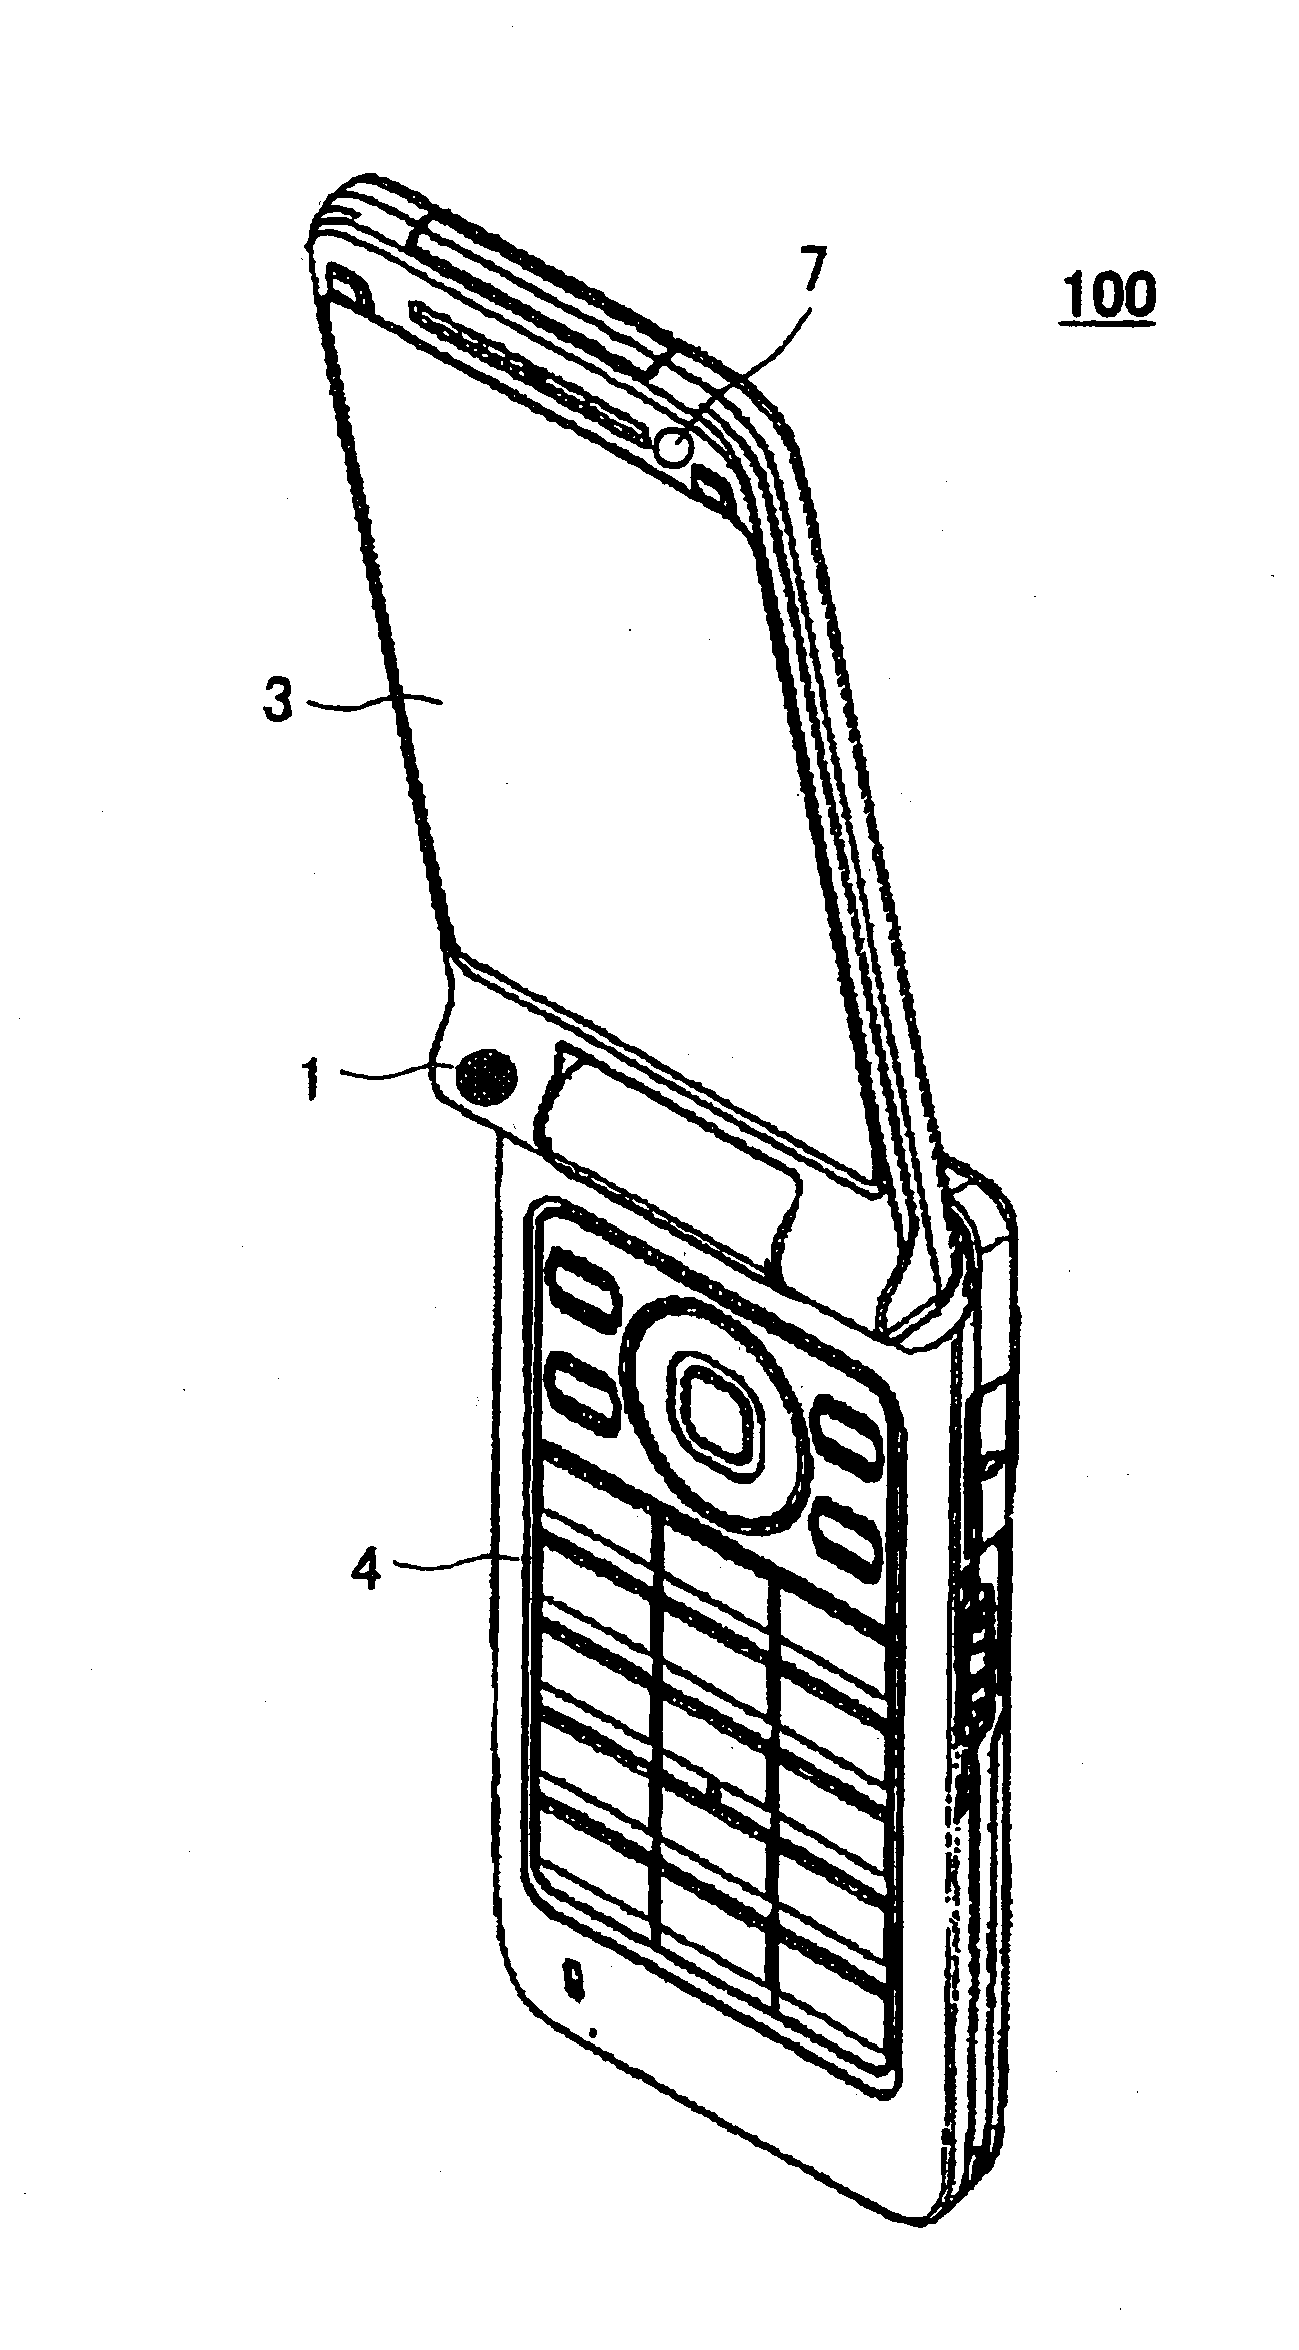 Communication device